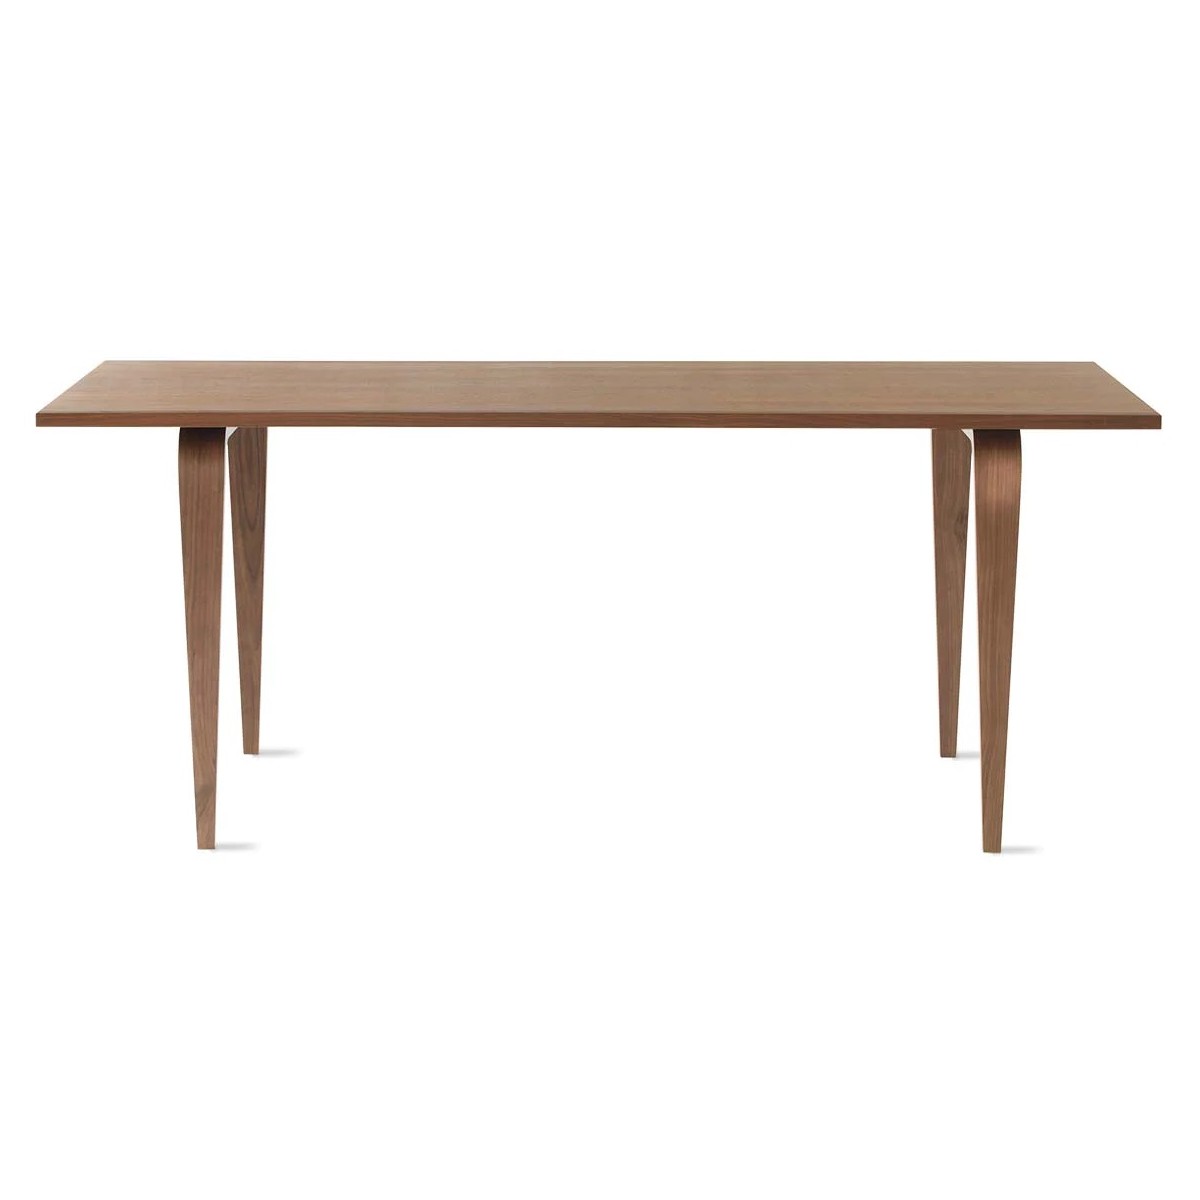 182,8 x 86,4 cm – rectangular table – Natural walnut